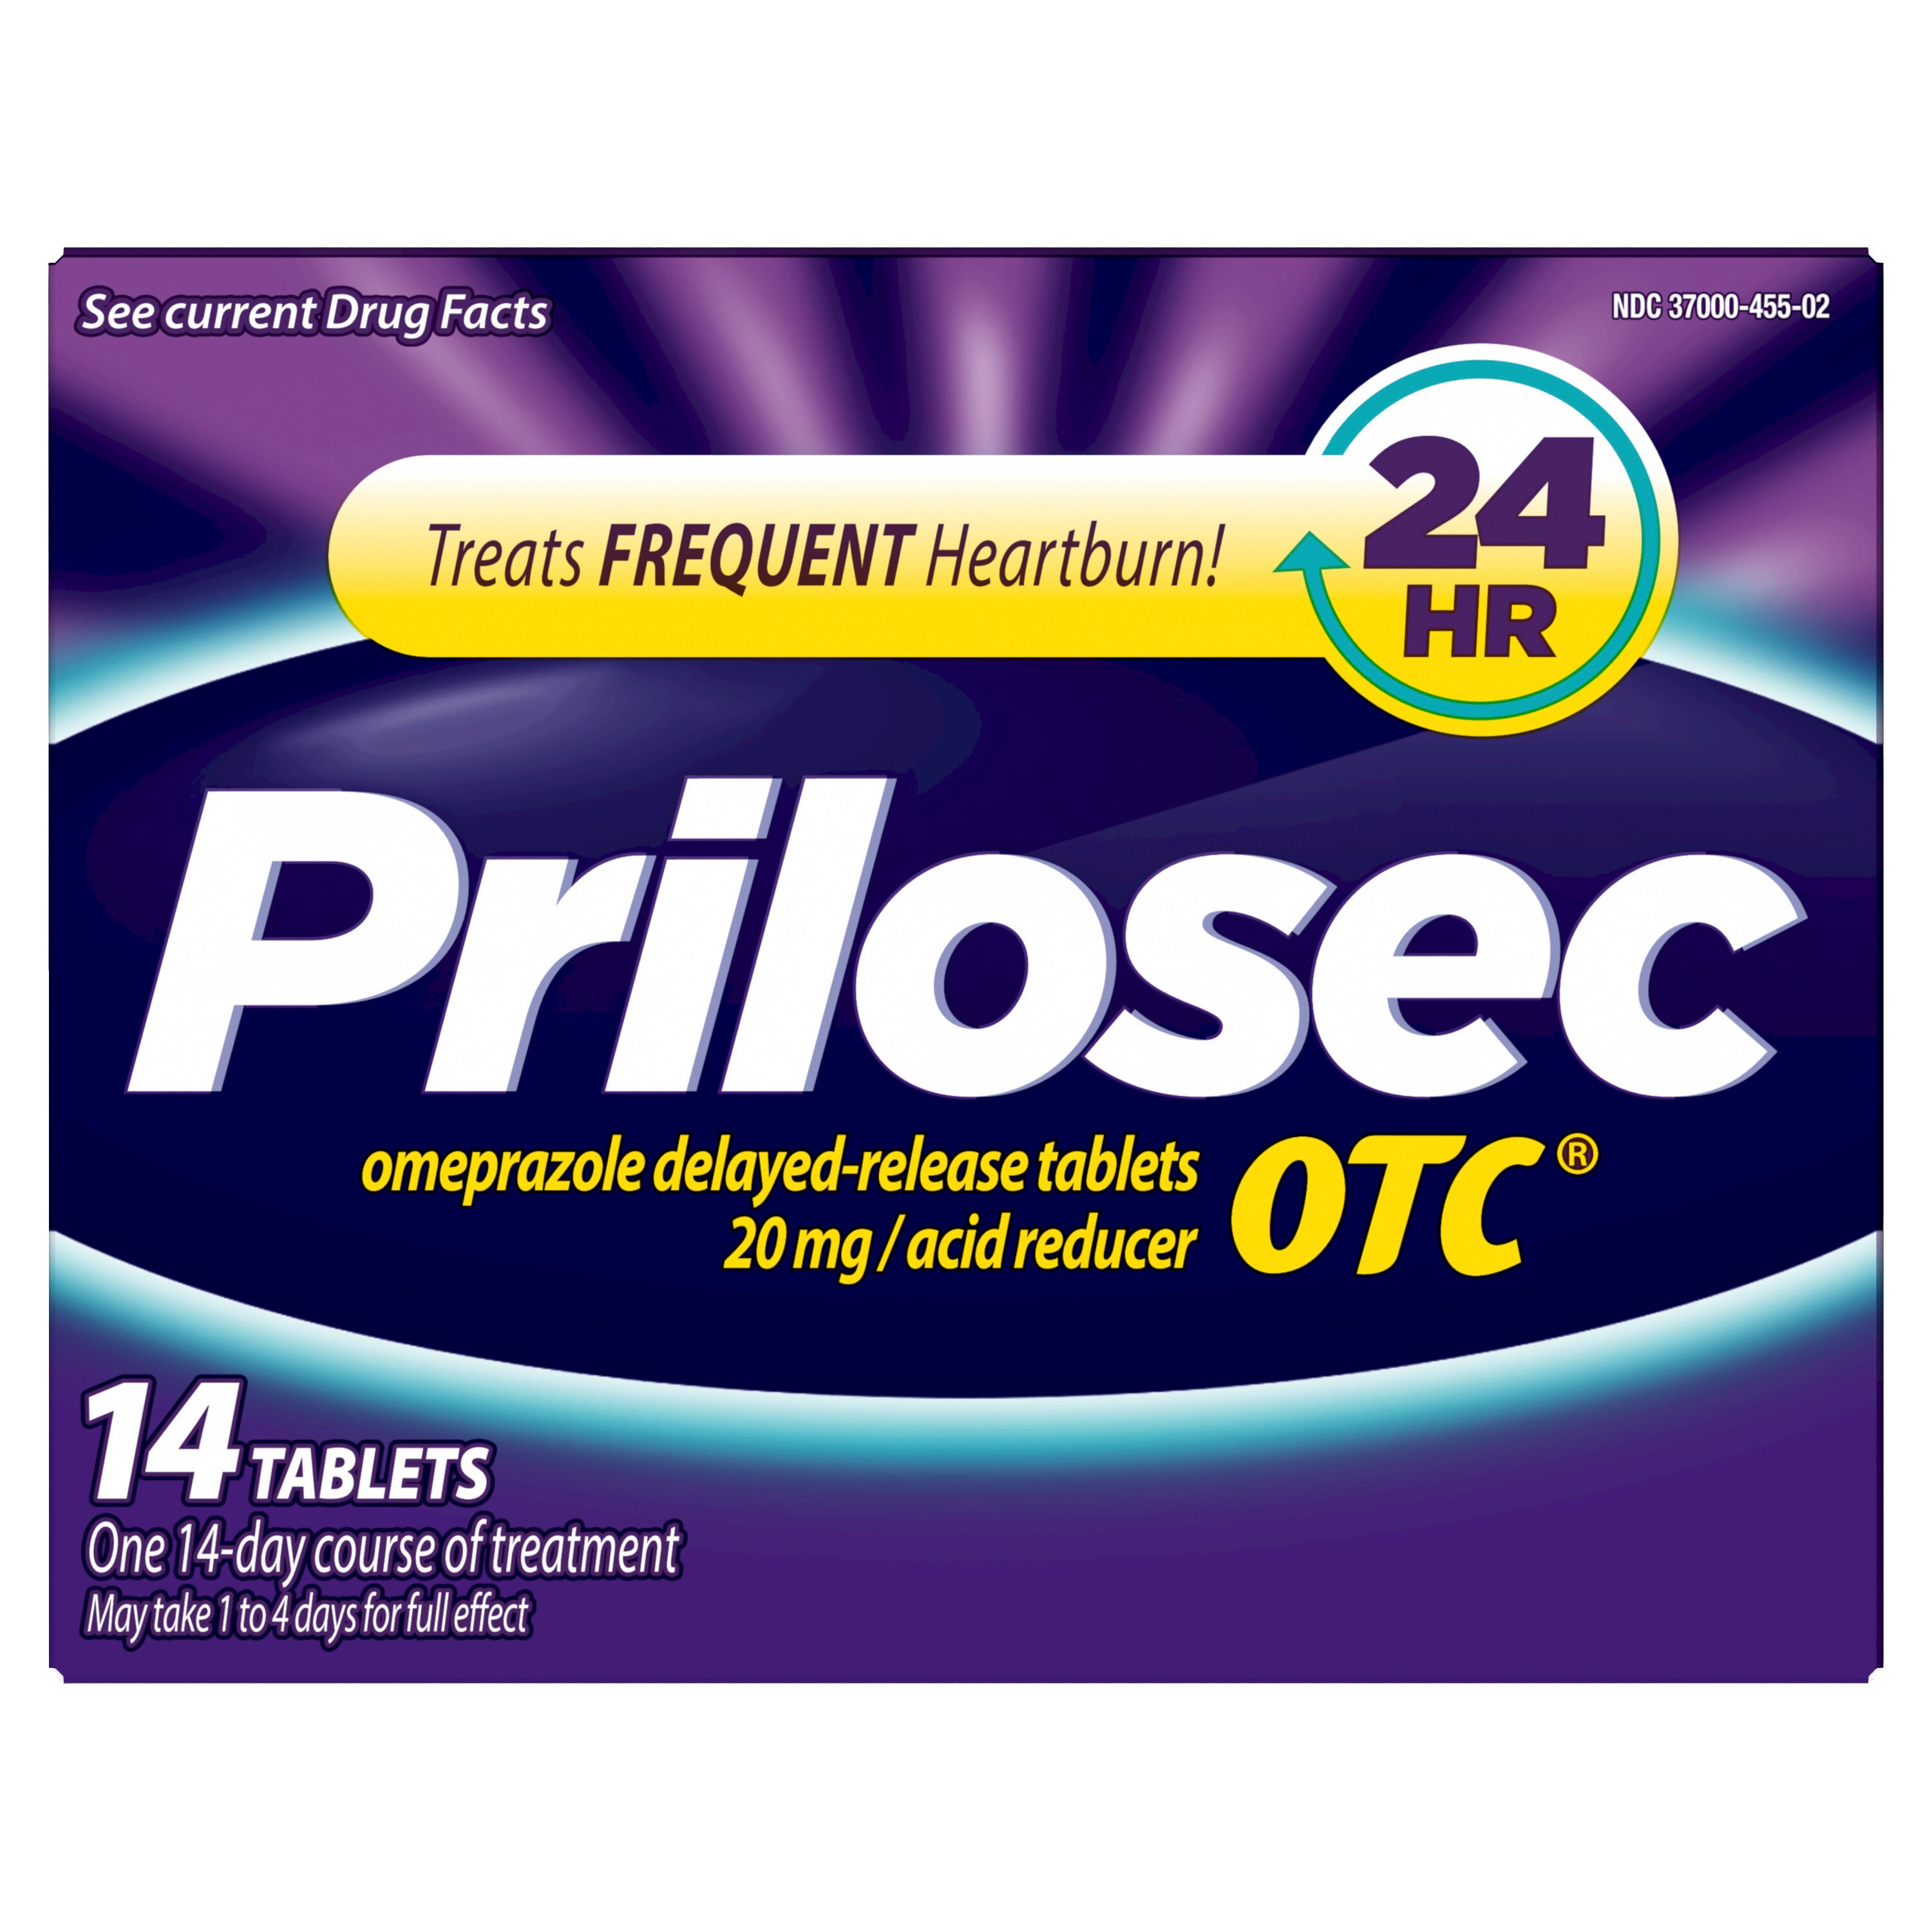 Prilosec OTC Omeprazole 20mg Delayed-Release Acid Reducer For Frequent Heartburn Tablets, 14 Ct , CVS